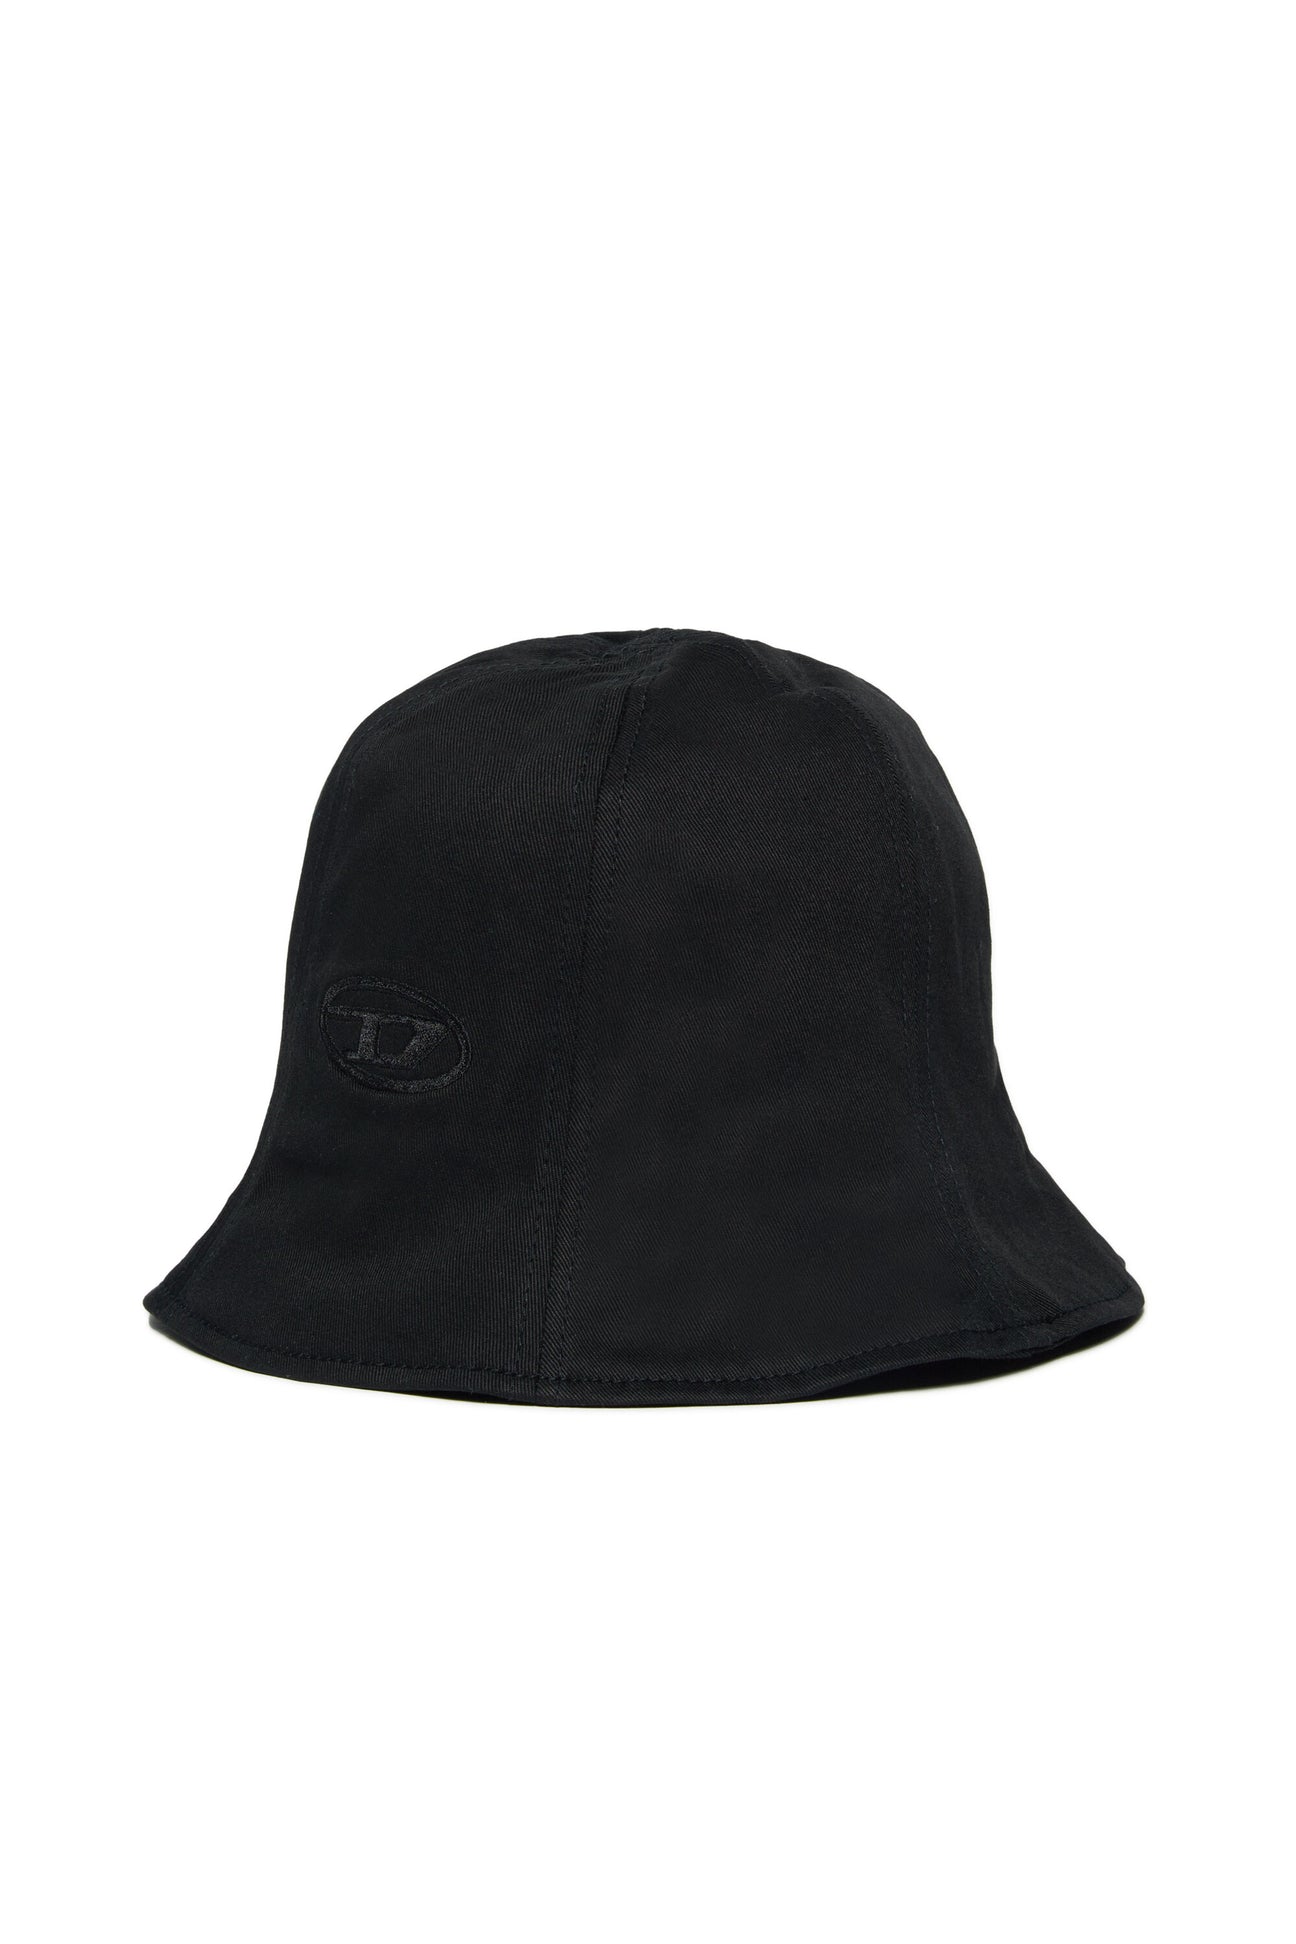 Oval D branded fisherman hat 